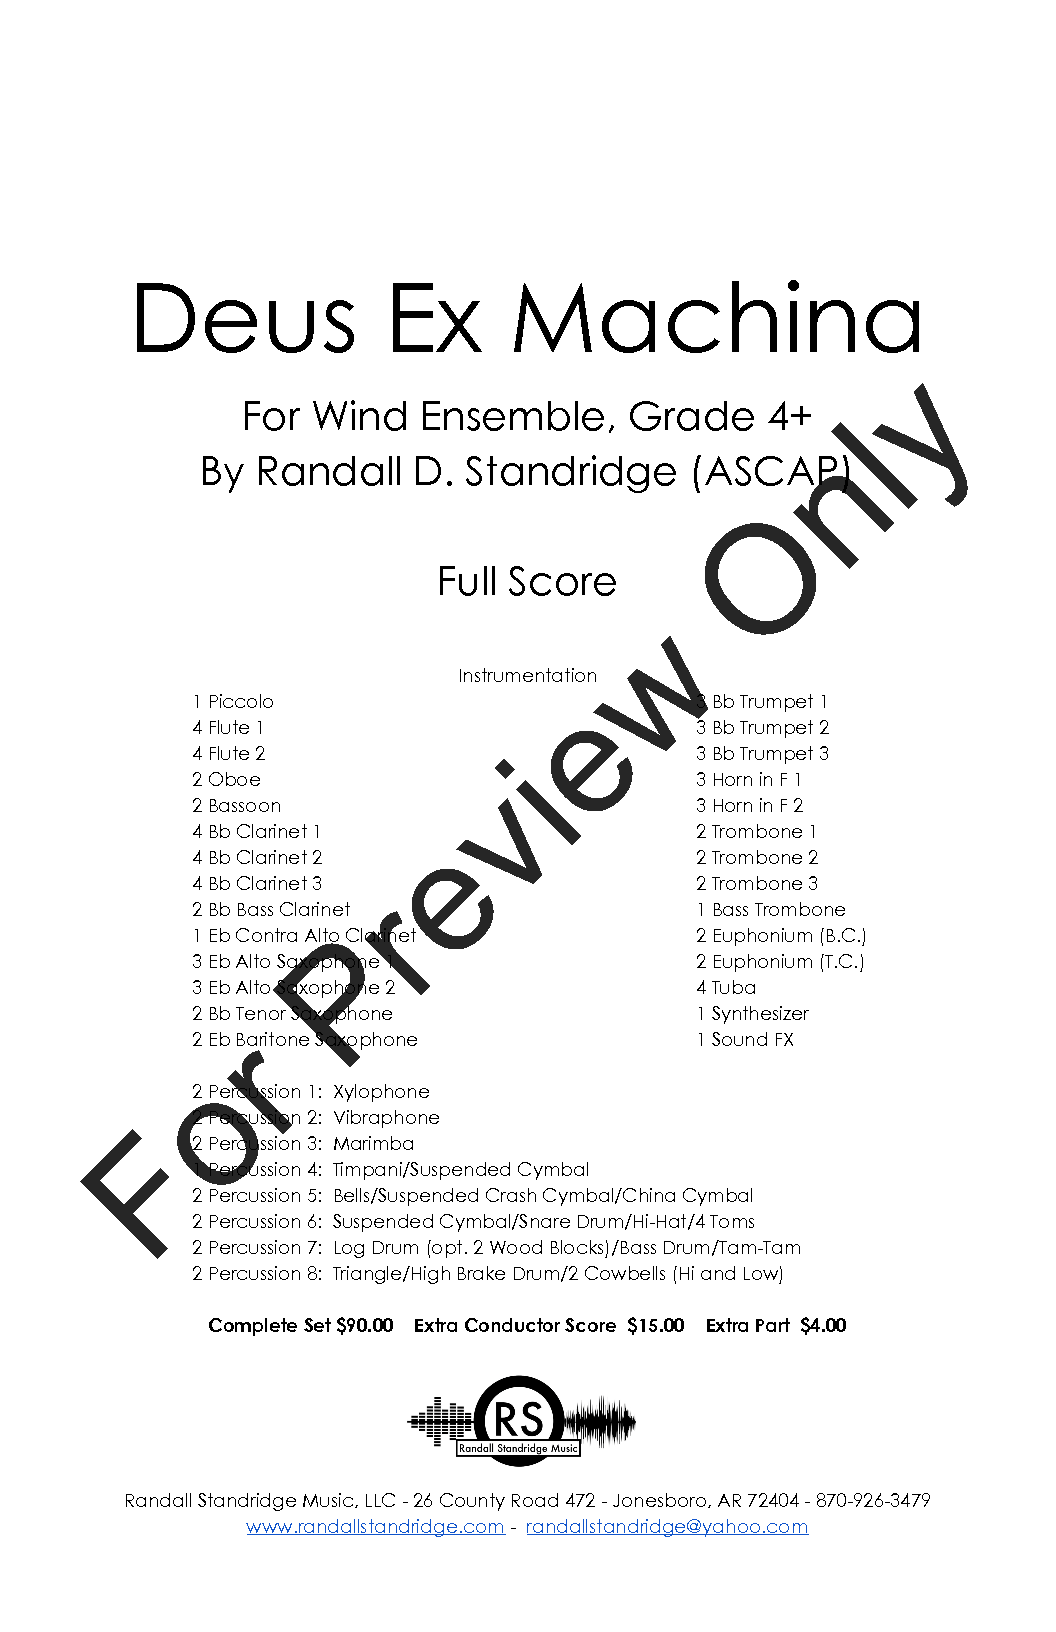 Deus ex Machina by Randall D. Standridge